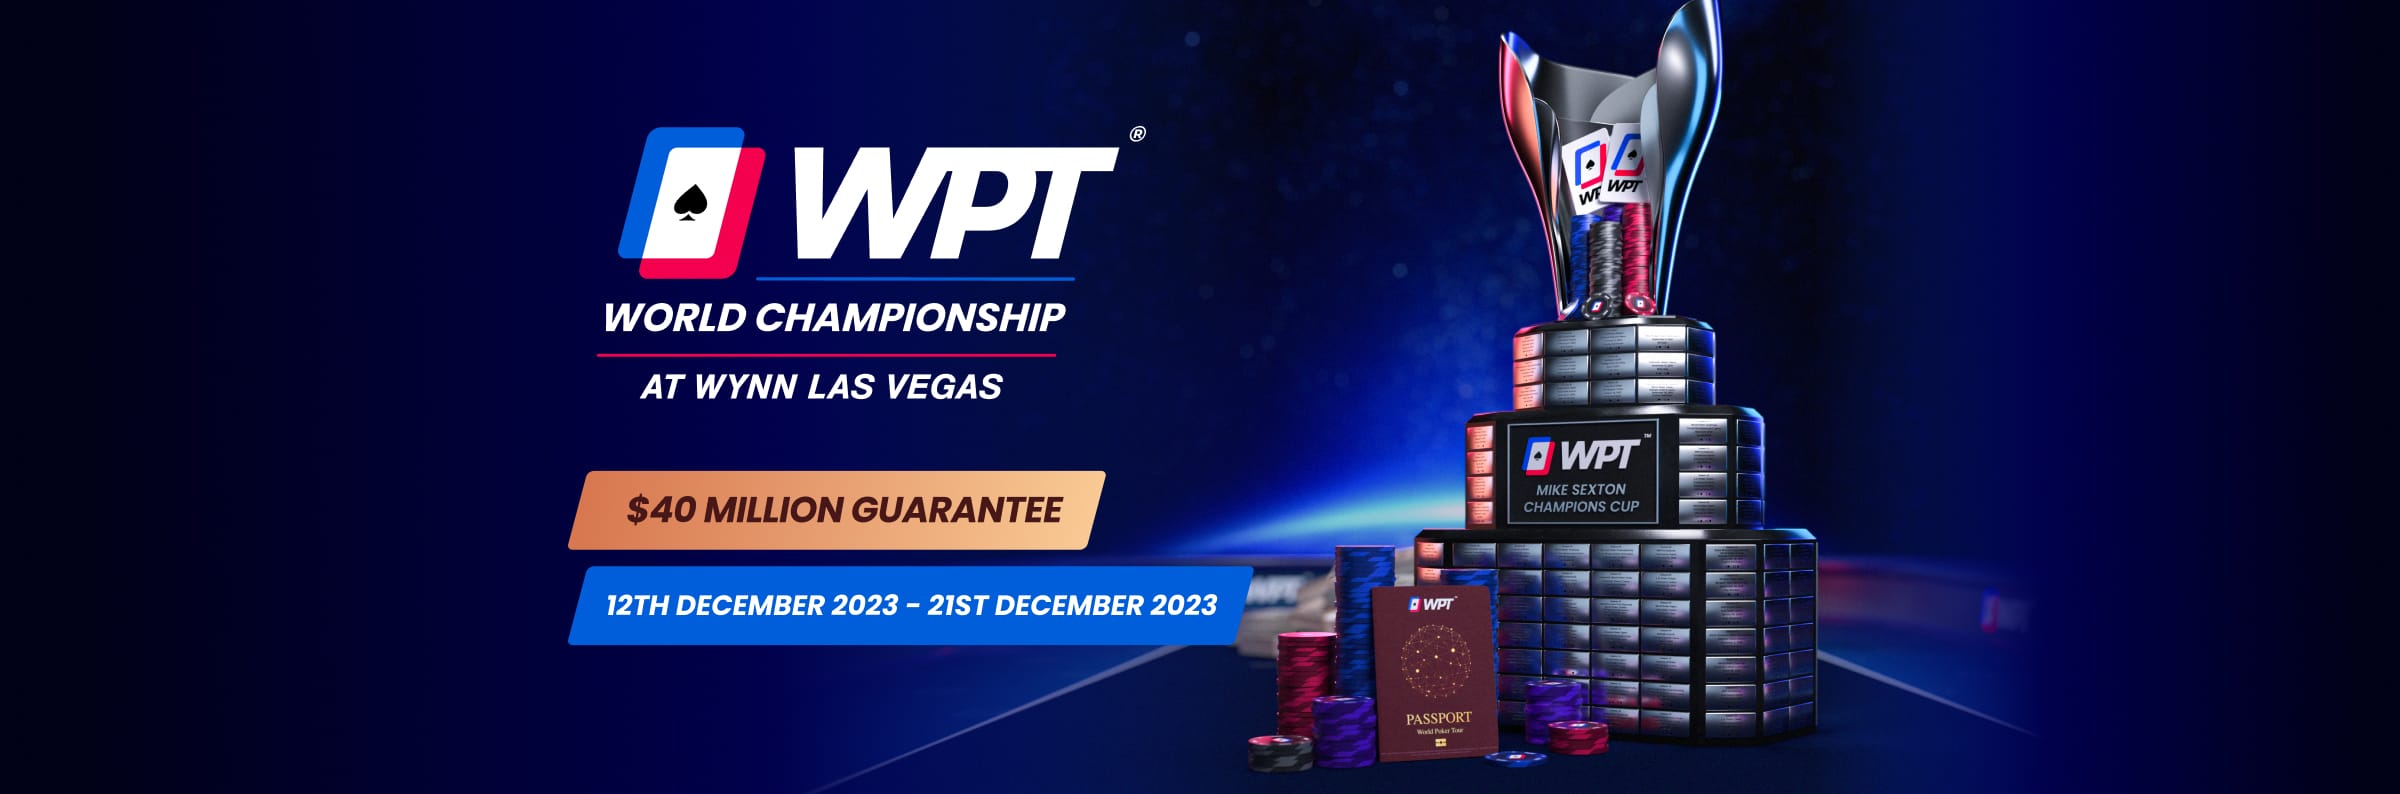 WPT World Championship at Wynn Las Vegas (40 Million GTD)